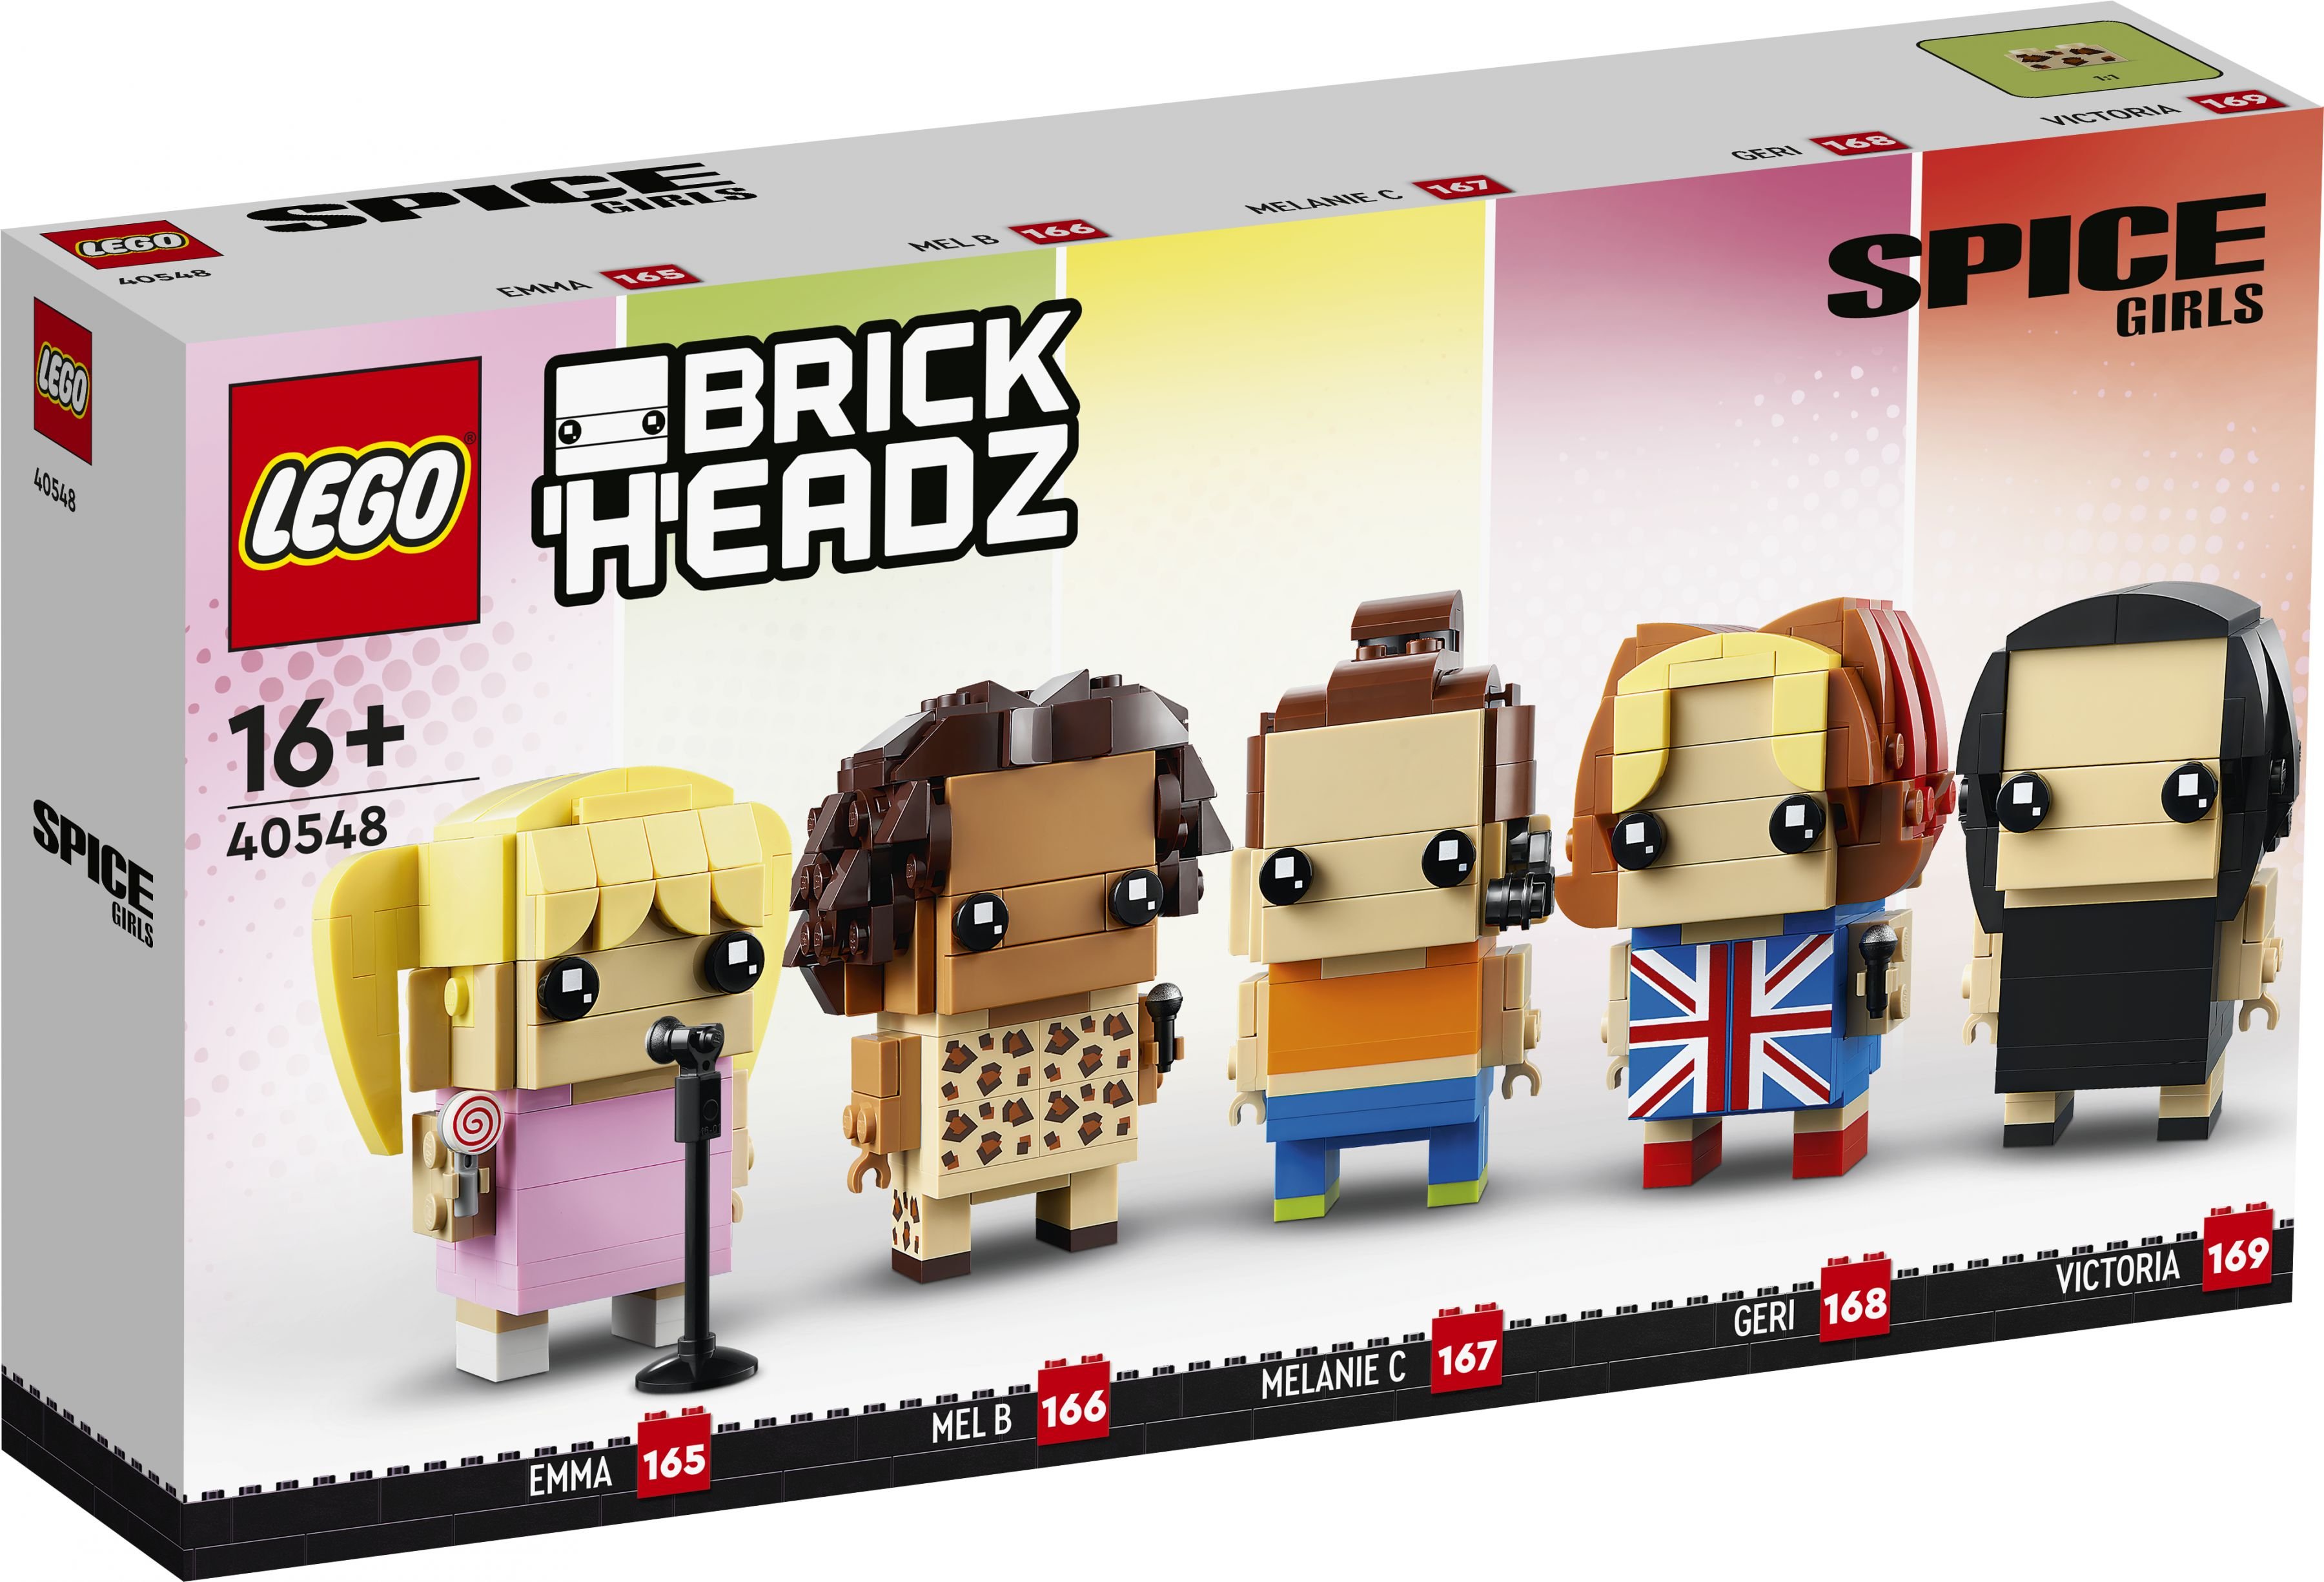 LEGO BrickHeadz 40548 Hommage an die Spice Girls LEGO_40548_Box1_v29.jpg